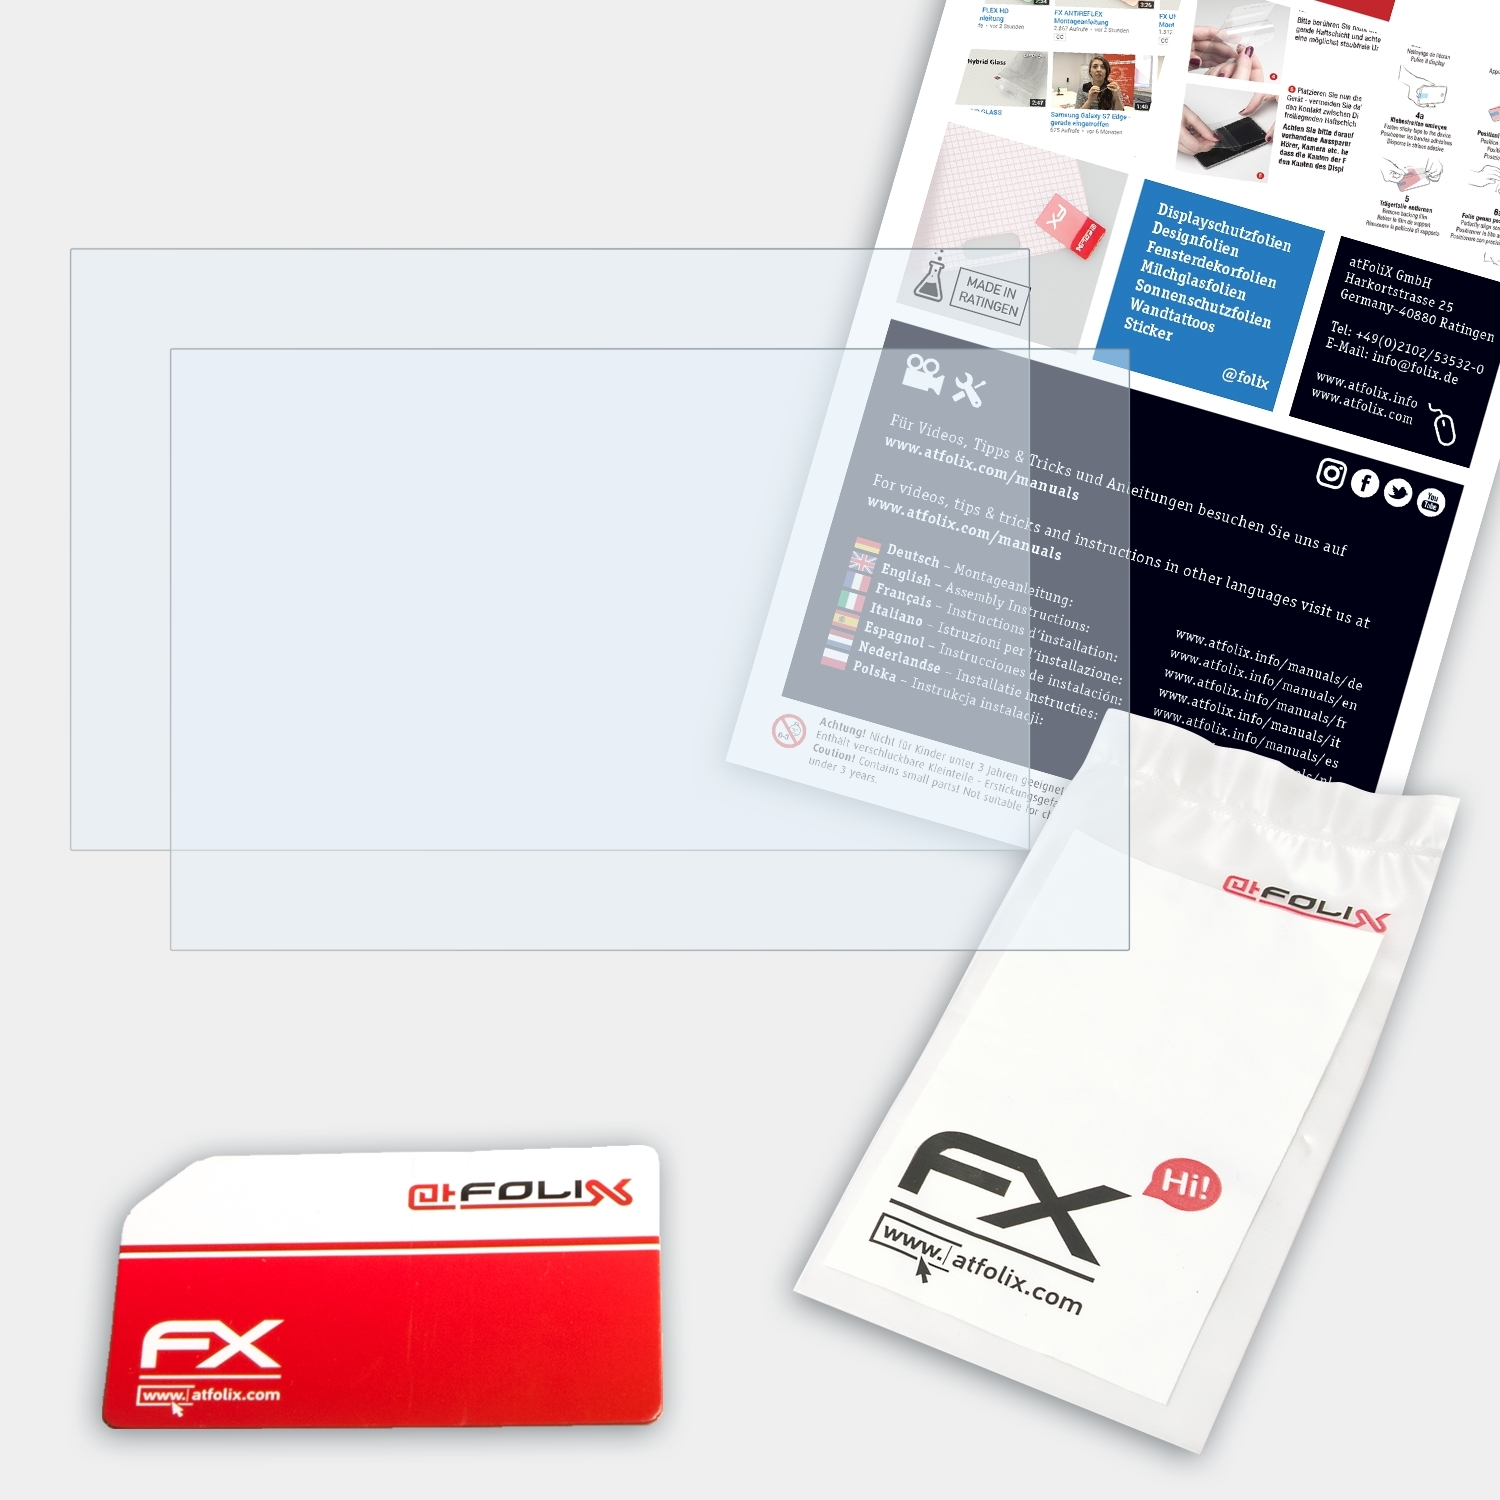 ATFOLIX 2x Displayschutz(für Lifebook T730) FX-Clear Fujitsu